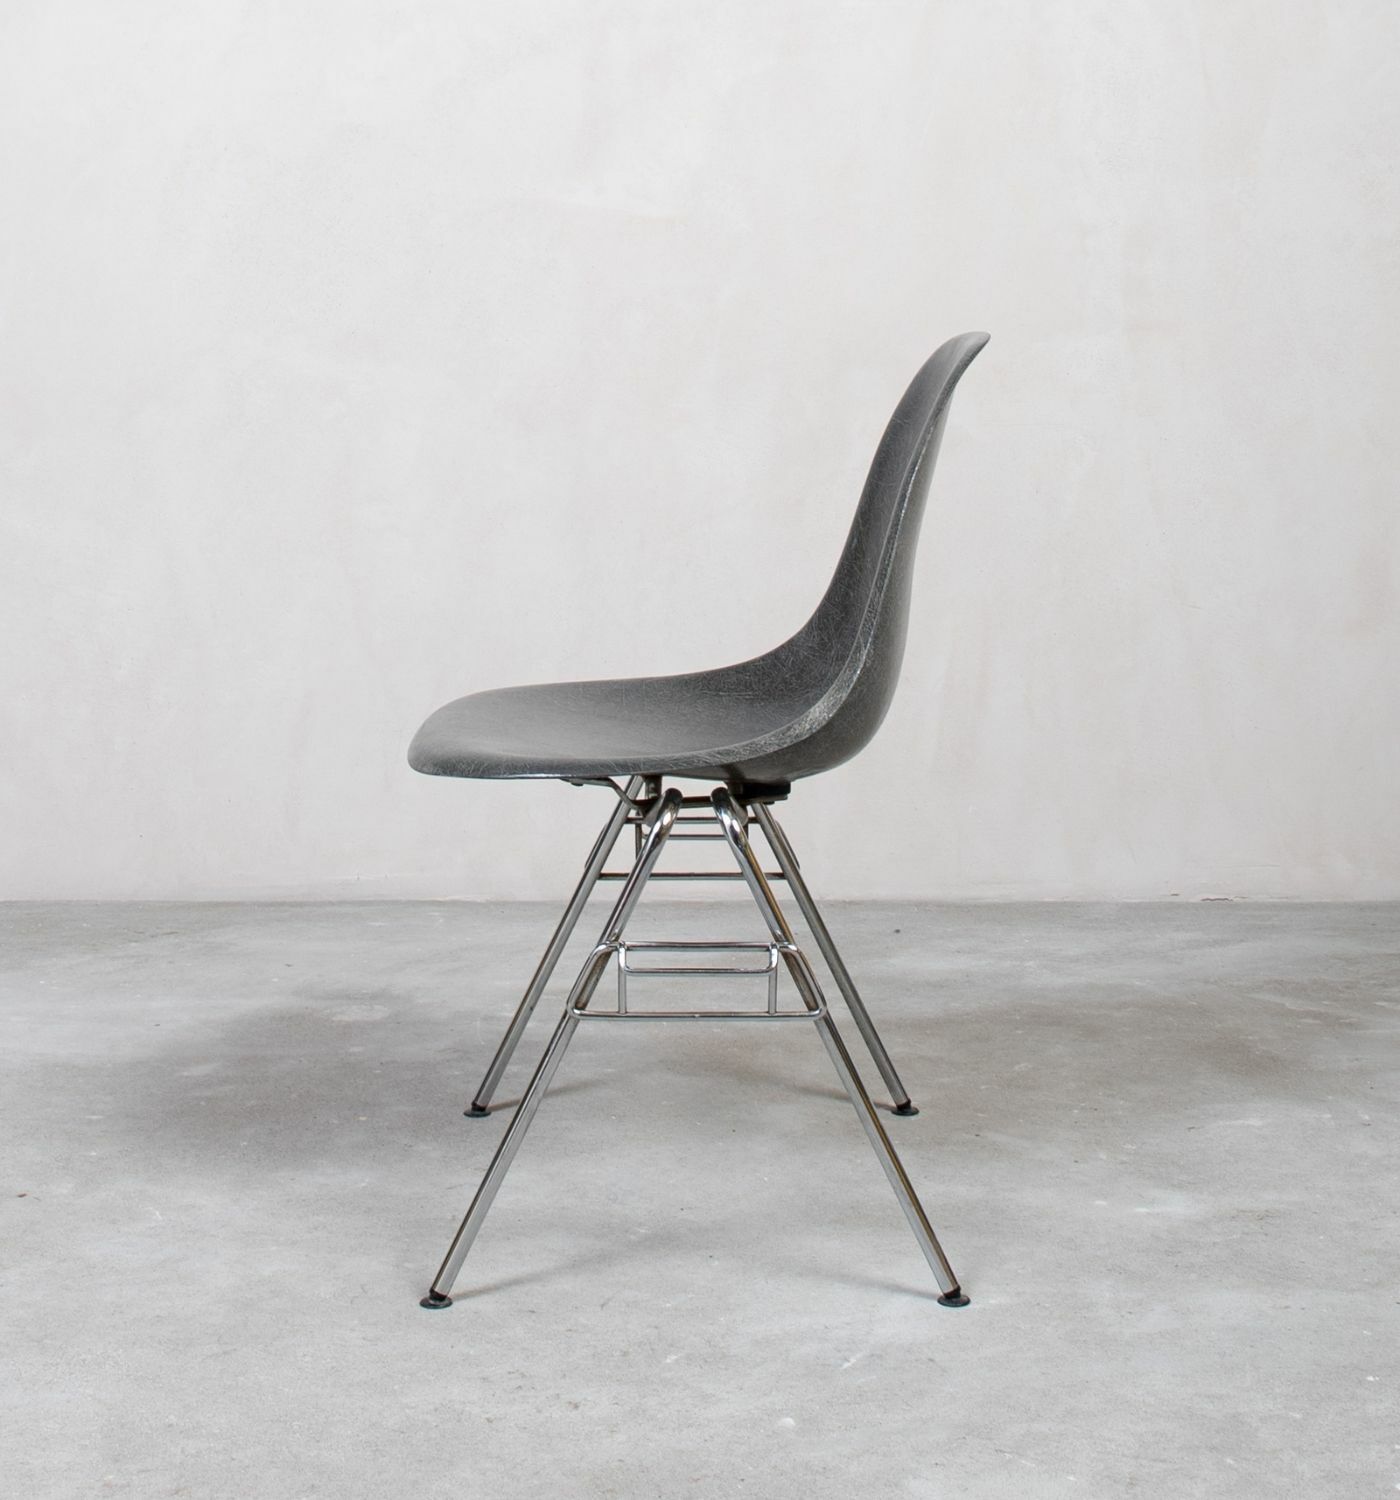 Eames Fiberglass Side Chair by Herman Miller Elephant Grey 2